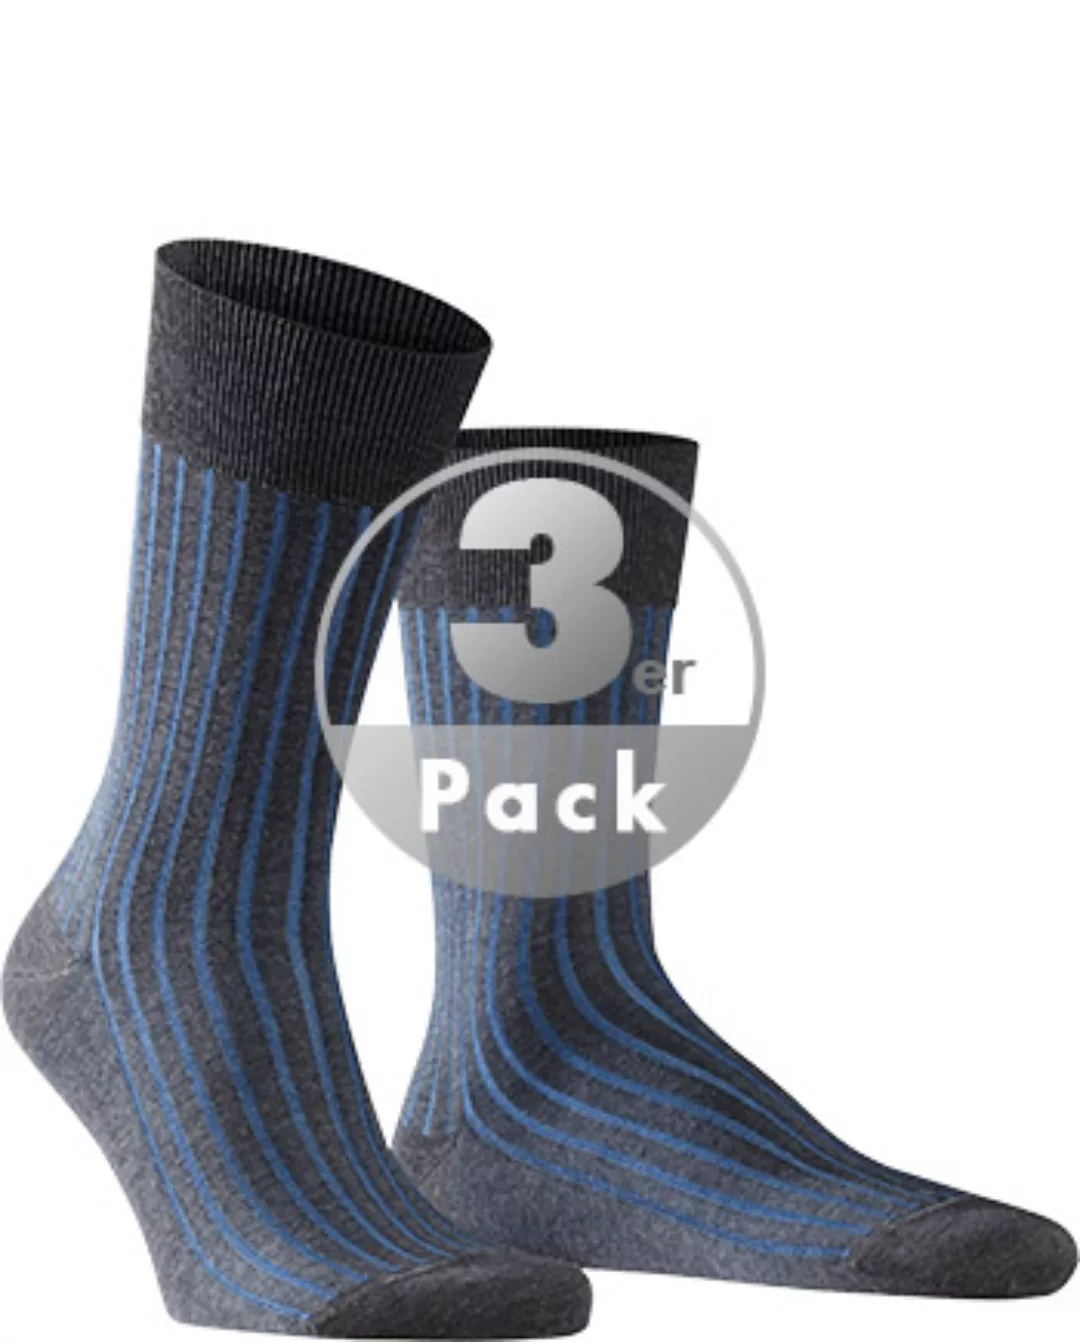 FALKE Shadow Herren Socken, 47-48, Grau, Rippe, Baumwolle, 14648-319107 günstig online kaufen